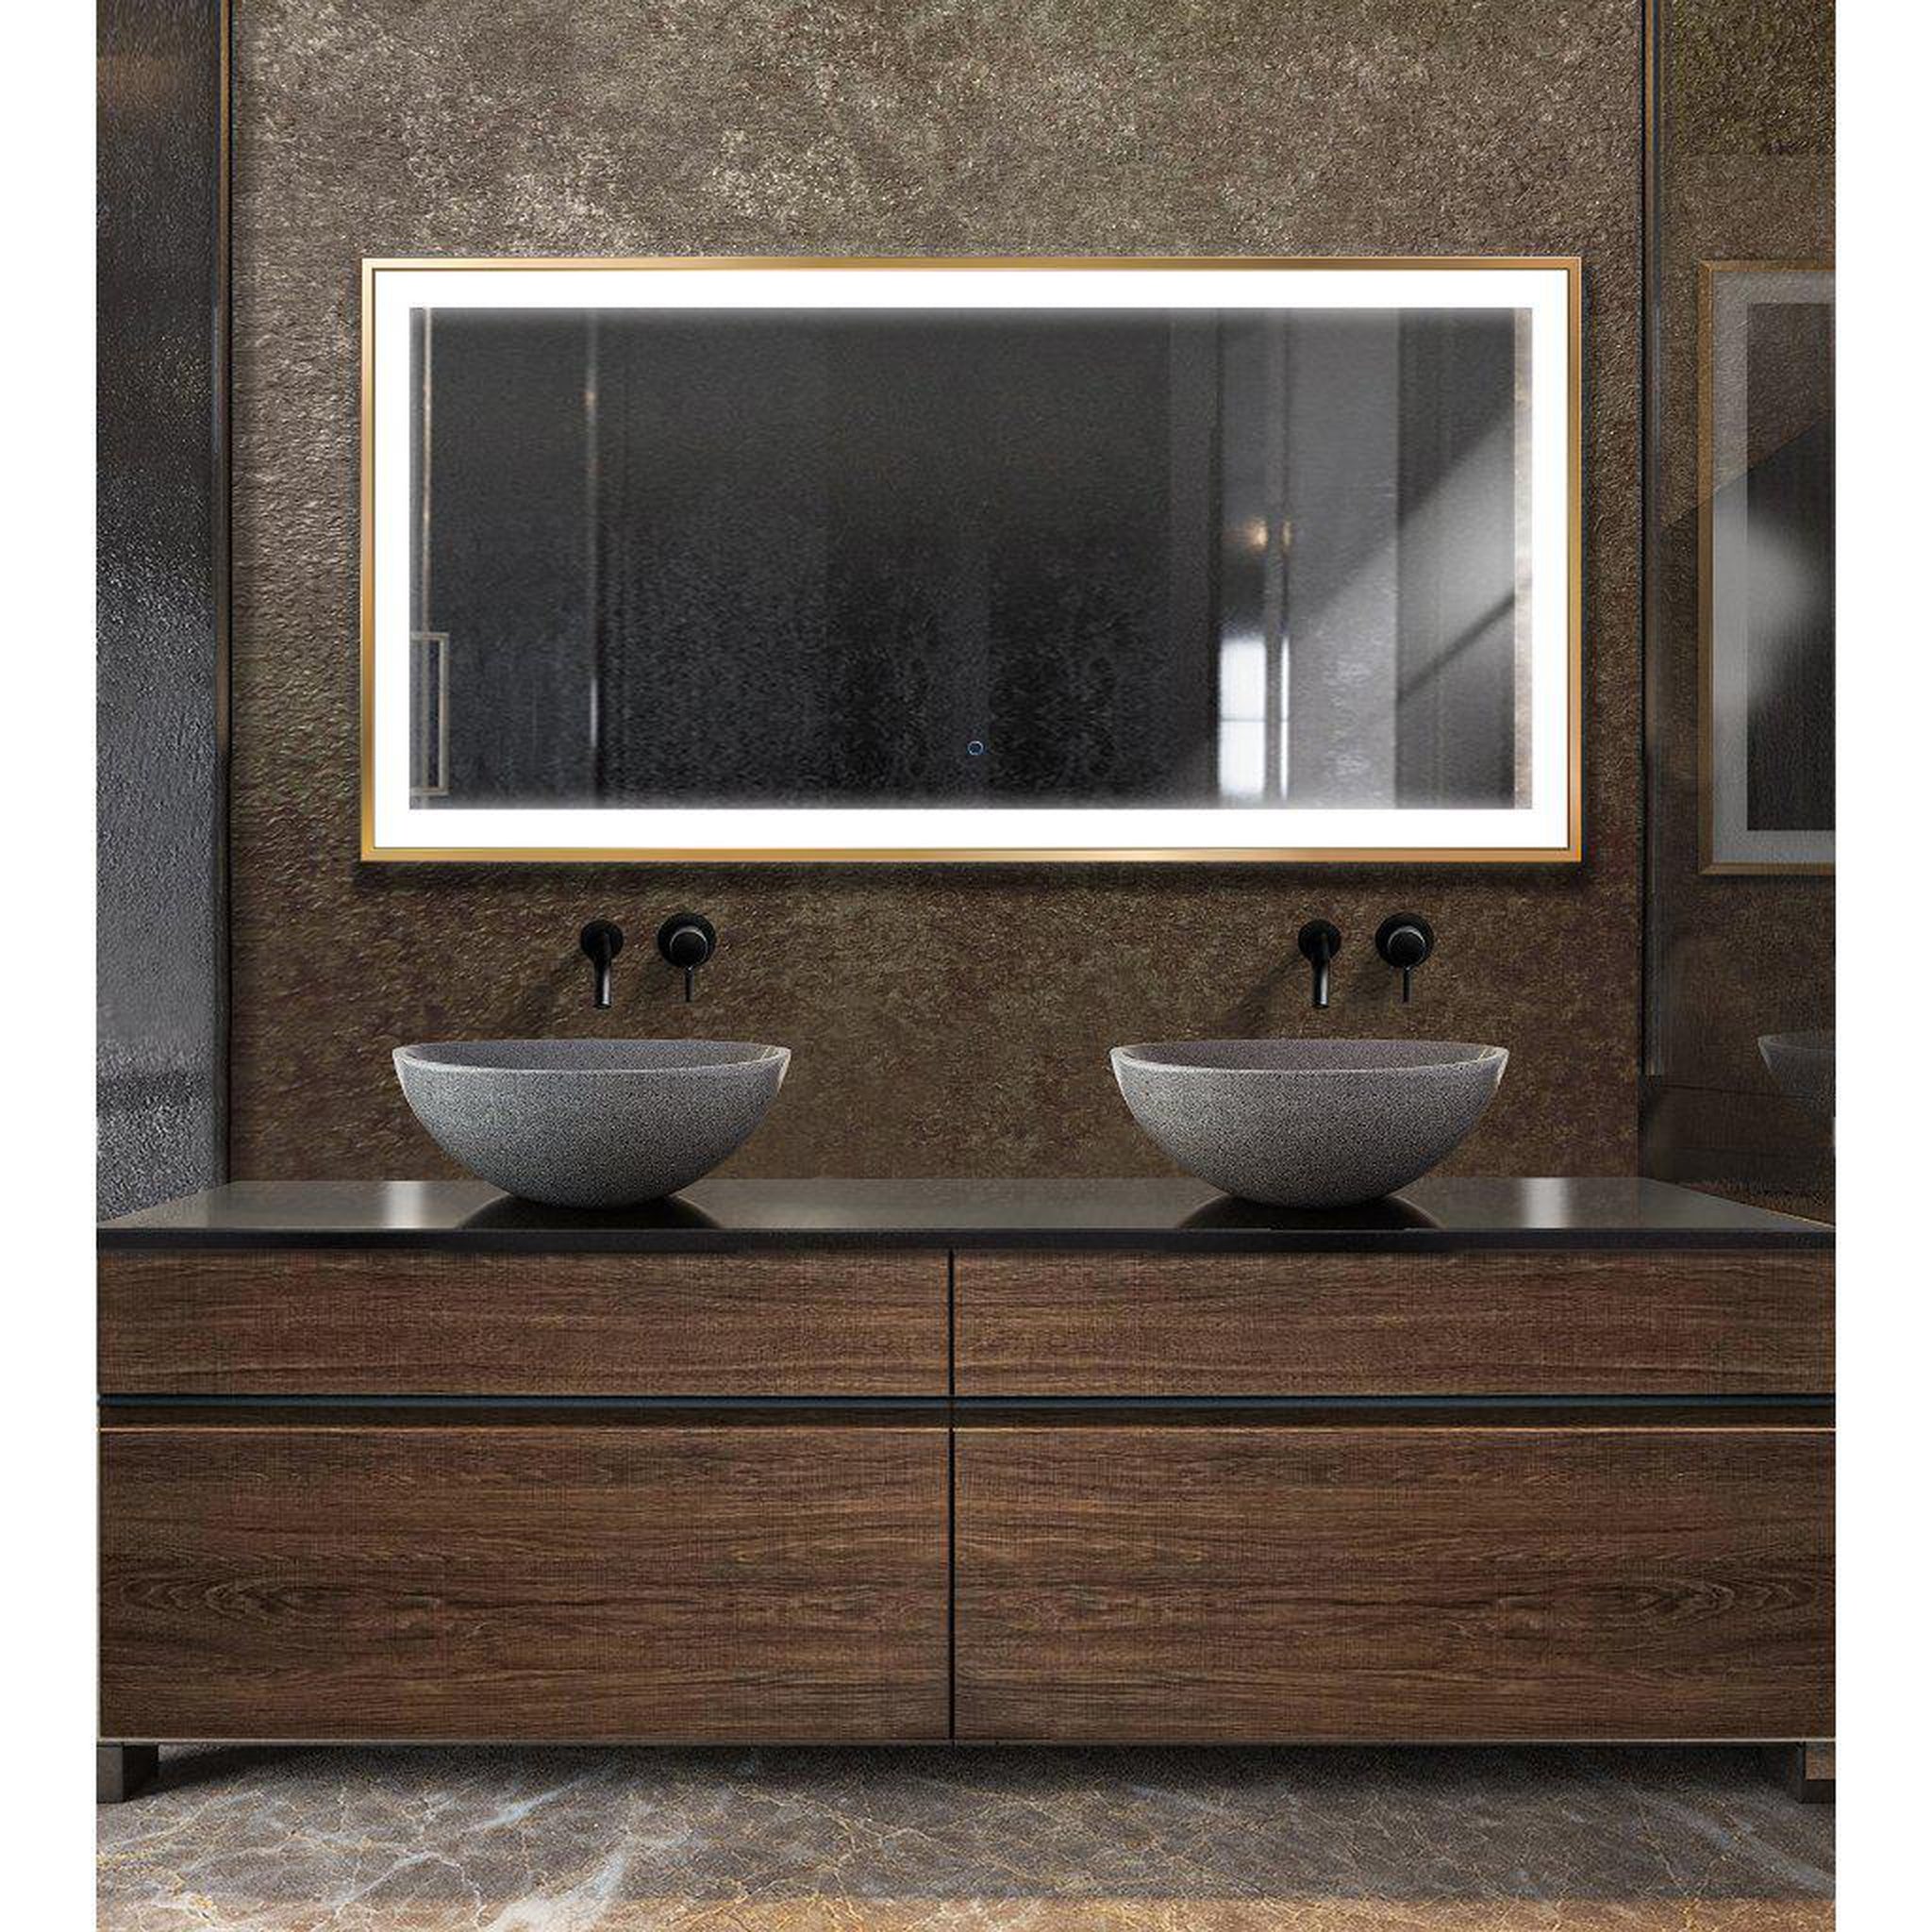 Krugg Reflections, Krugg Reflections Soho 60" x 30" 5000K Rectangular Matte Gold Wall-Mounted Framed LED Bathroom Vanity Mirror With Built-in Defogger and Dimmer